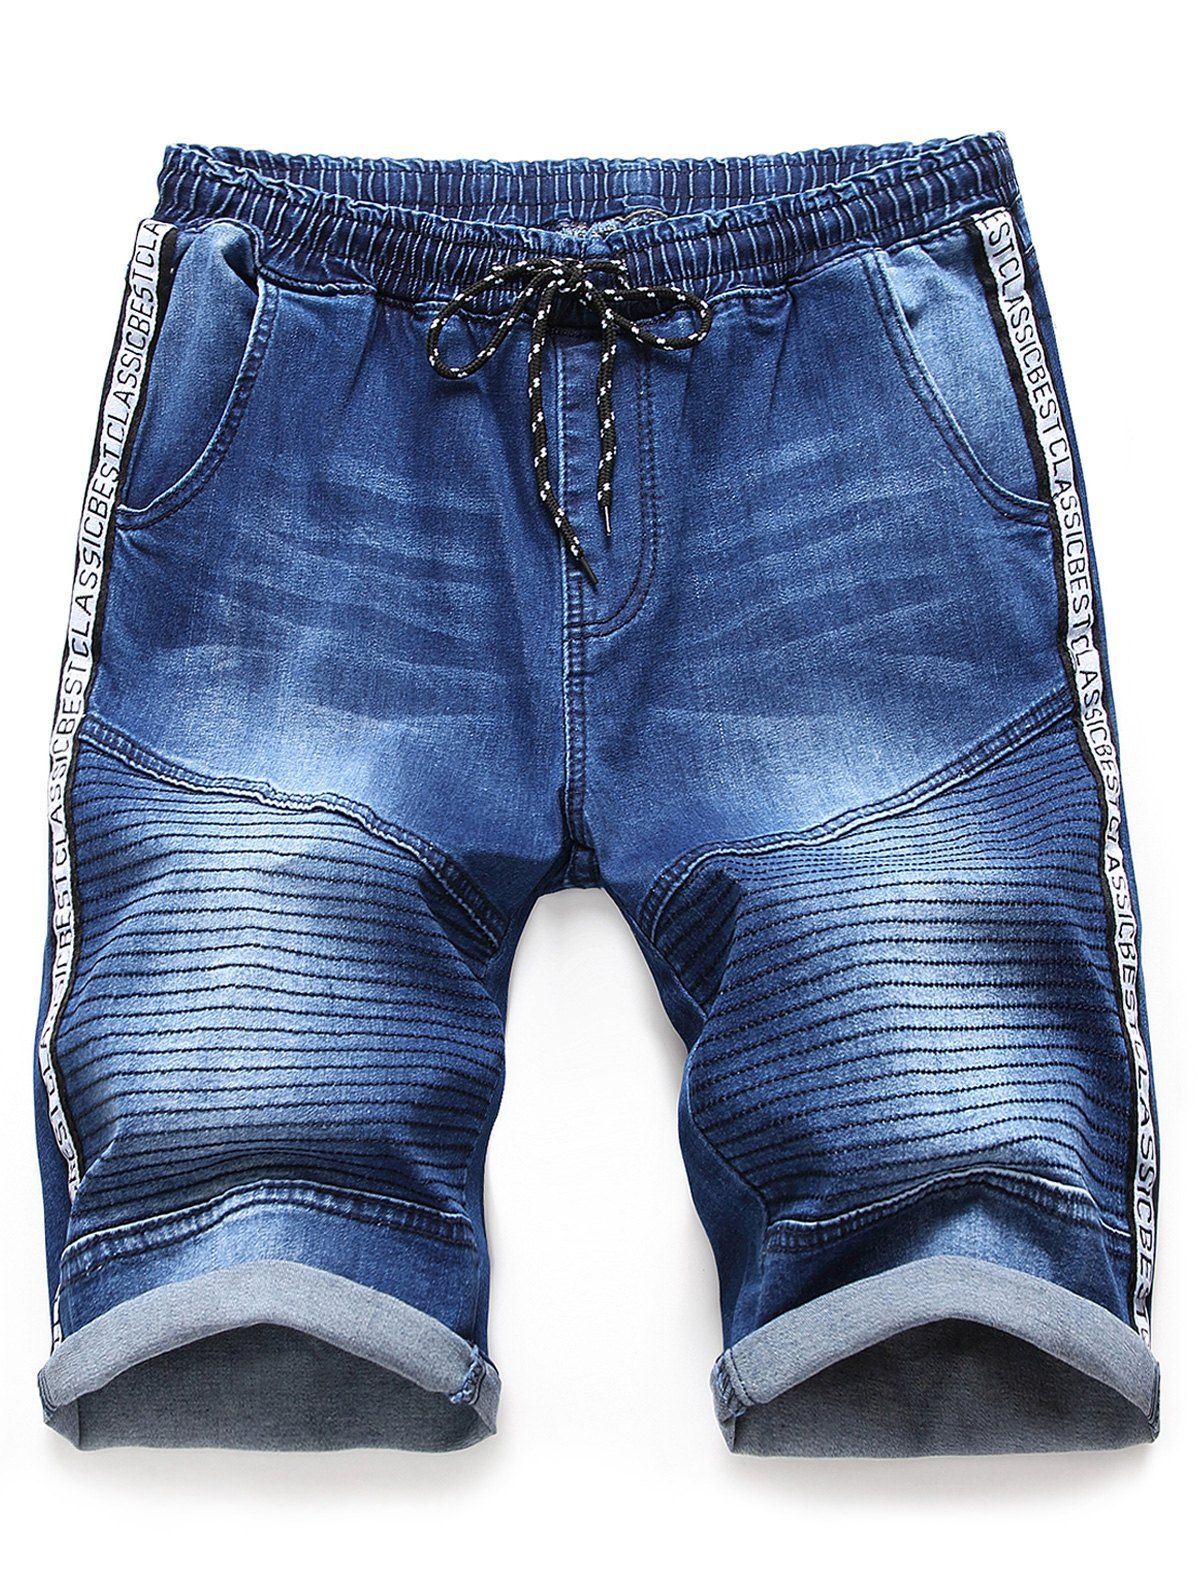 [33% OFF] 2021 Letter Print Casual Jeans Shorts In DENIM DARK BLUE ...